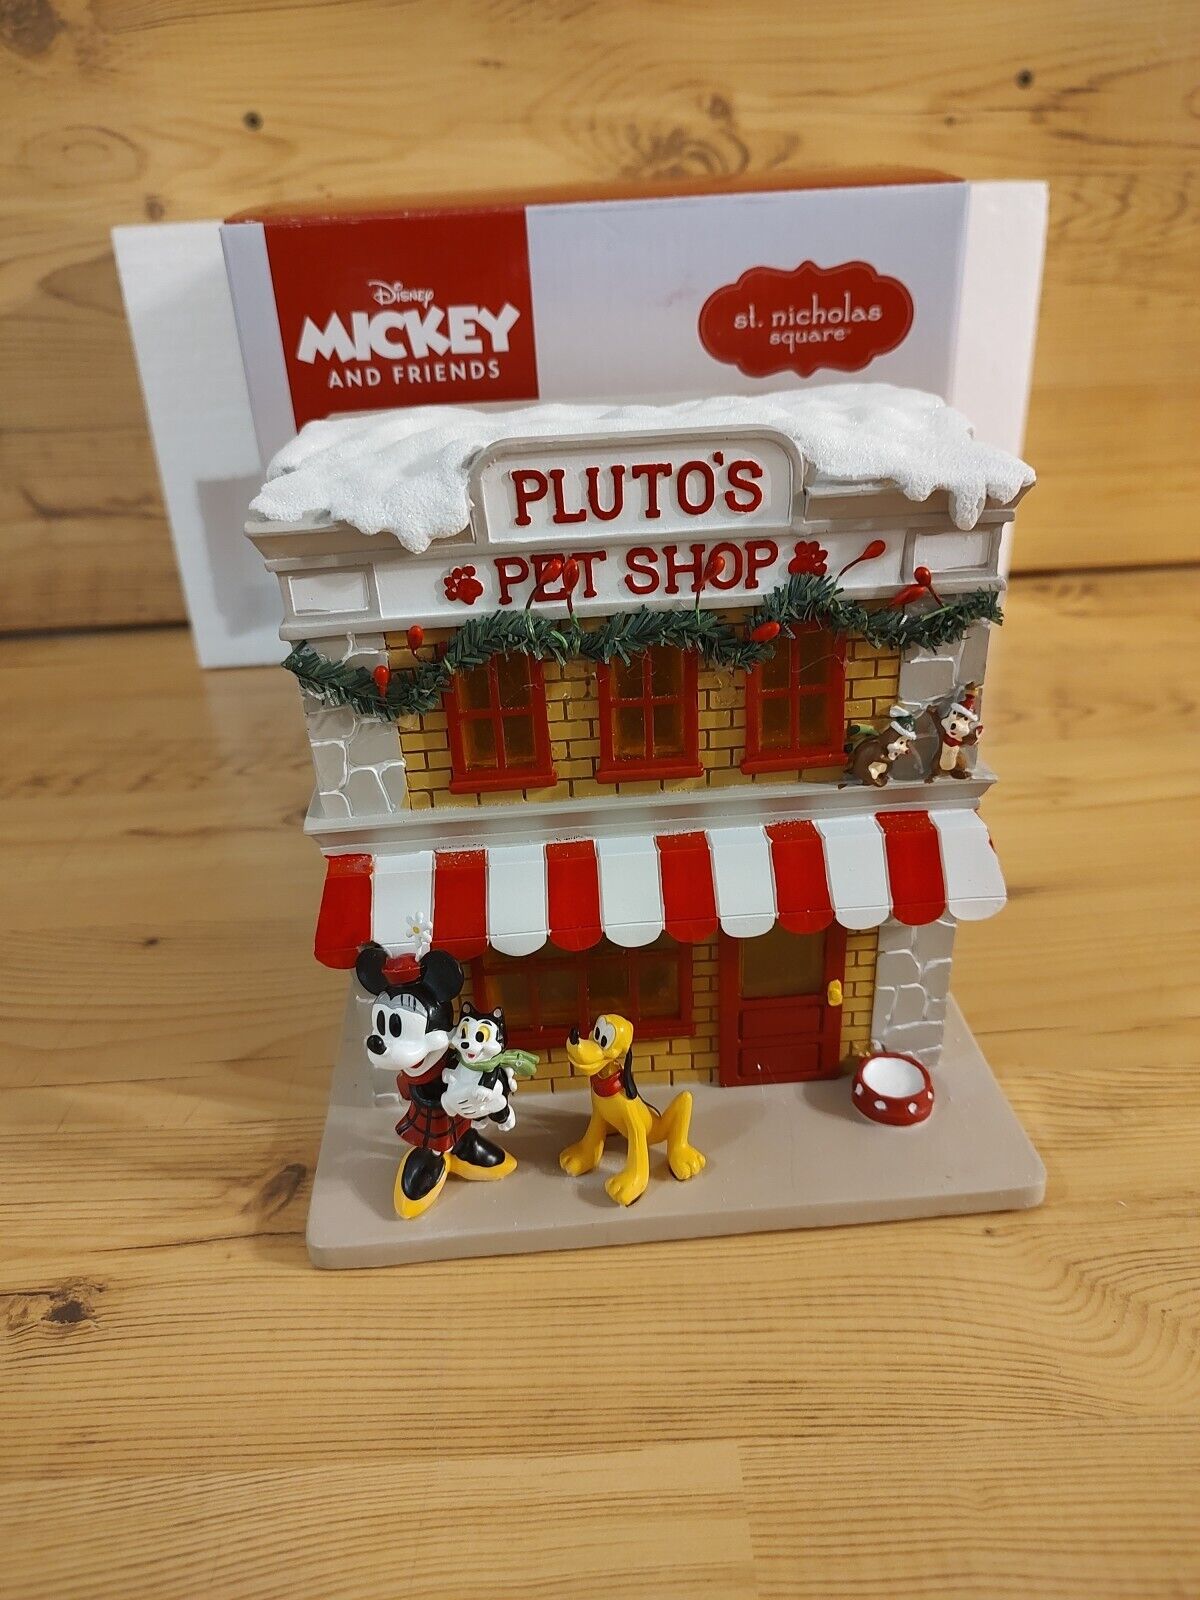 St. Nicholas Square Pluto's Pet Shop  Disney Mickey And Friends